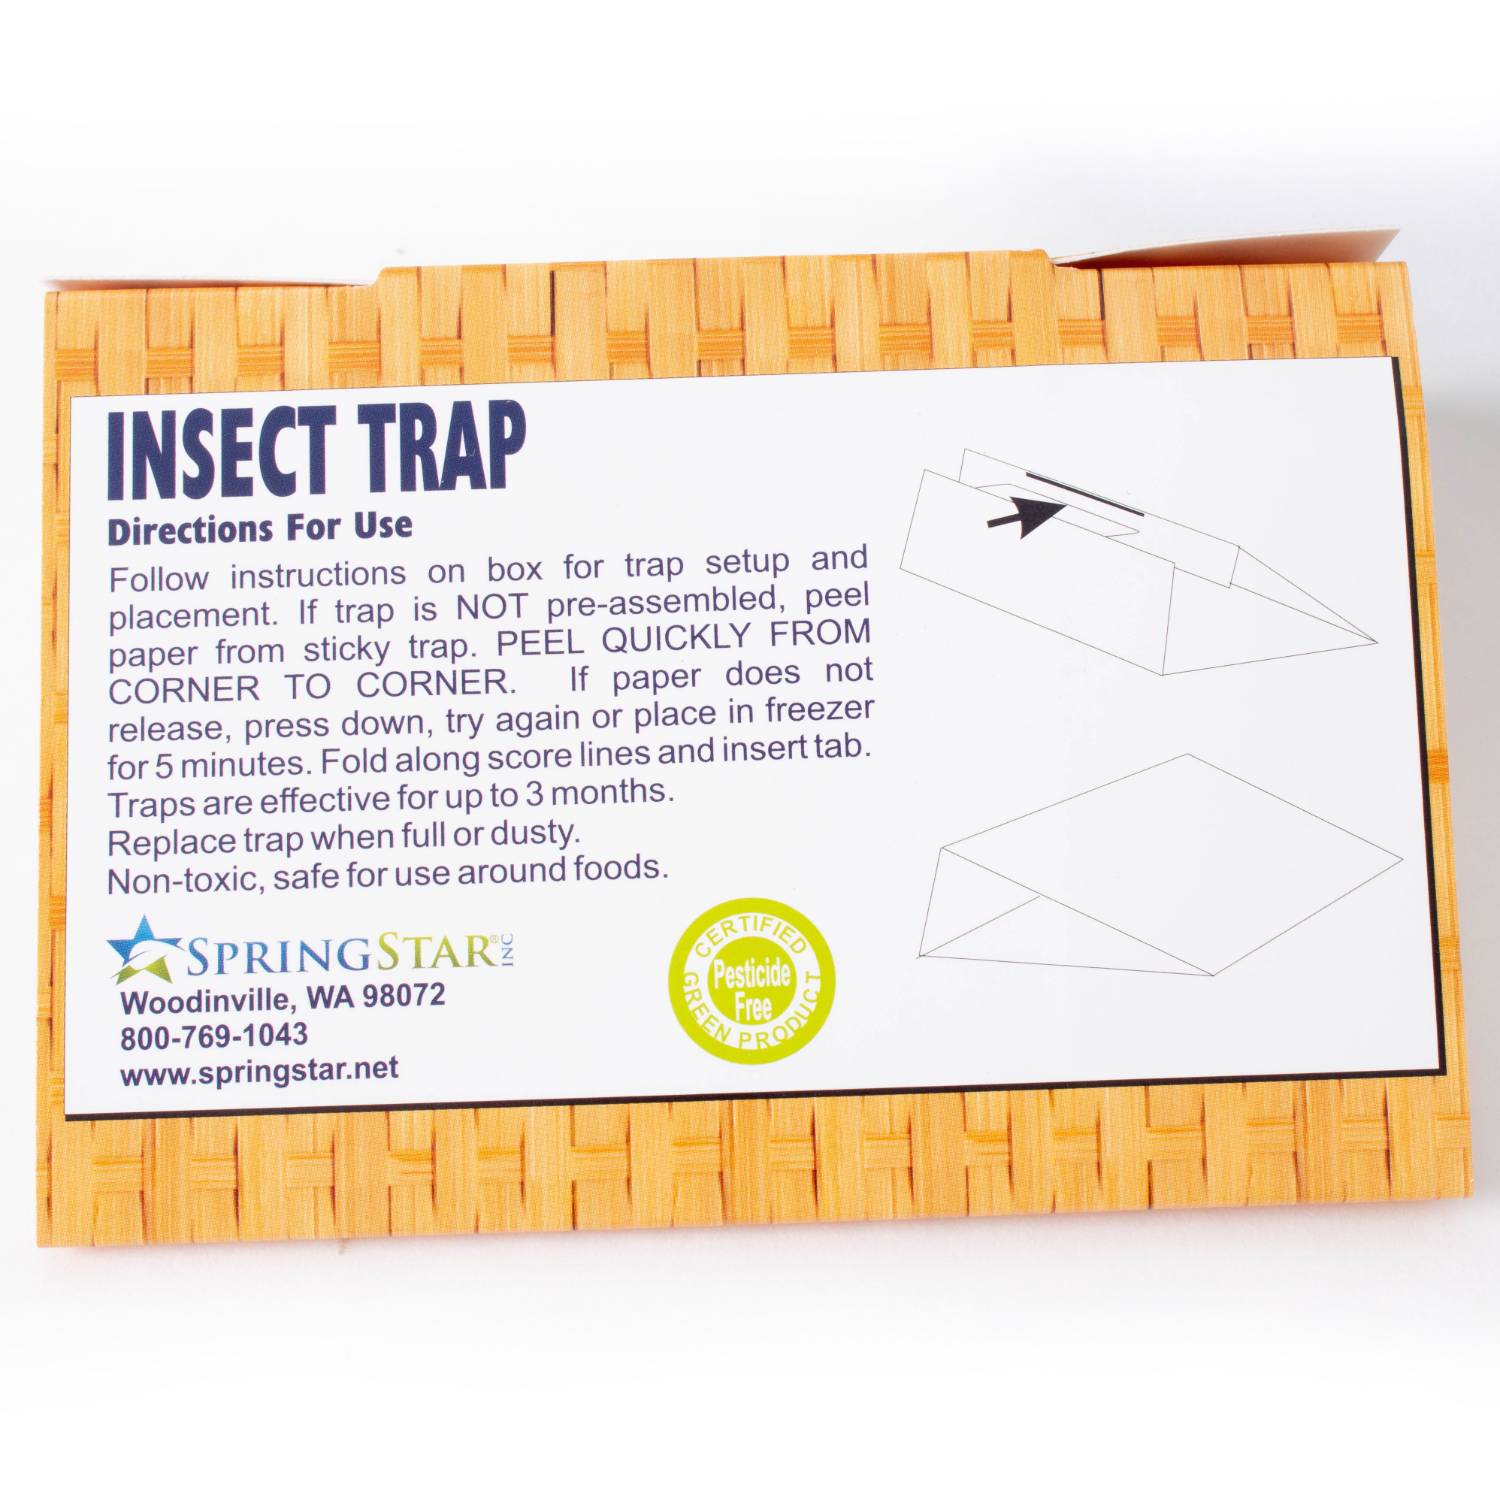 Closet Moth Trap, Pest Control - Lehman's